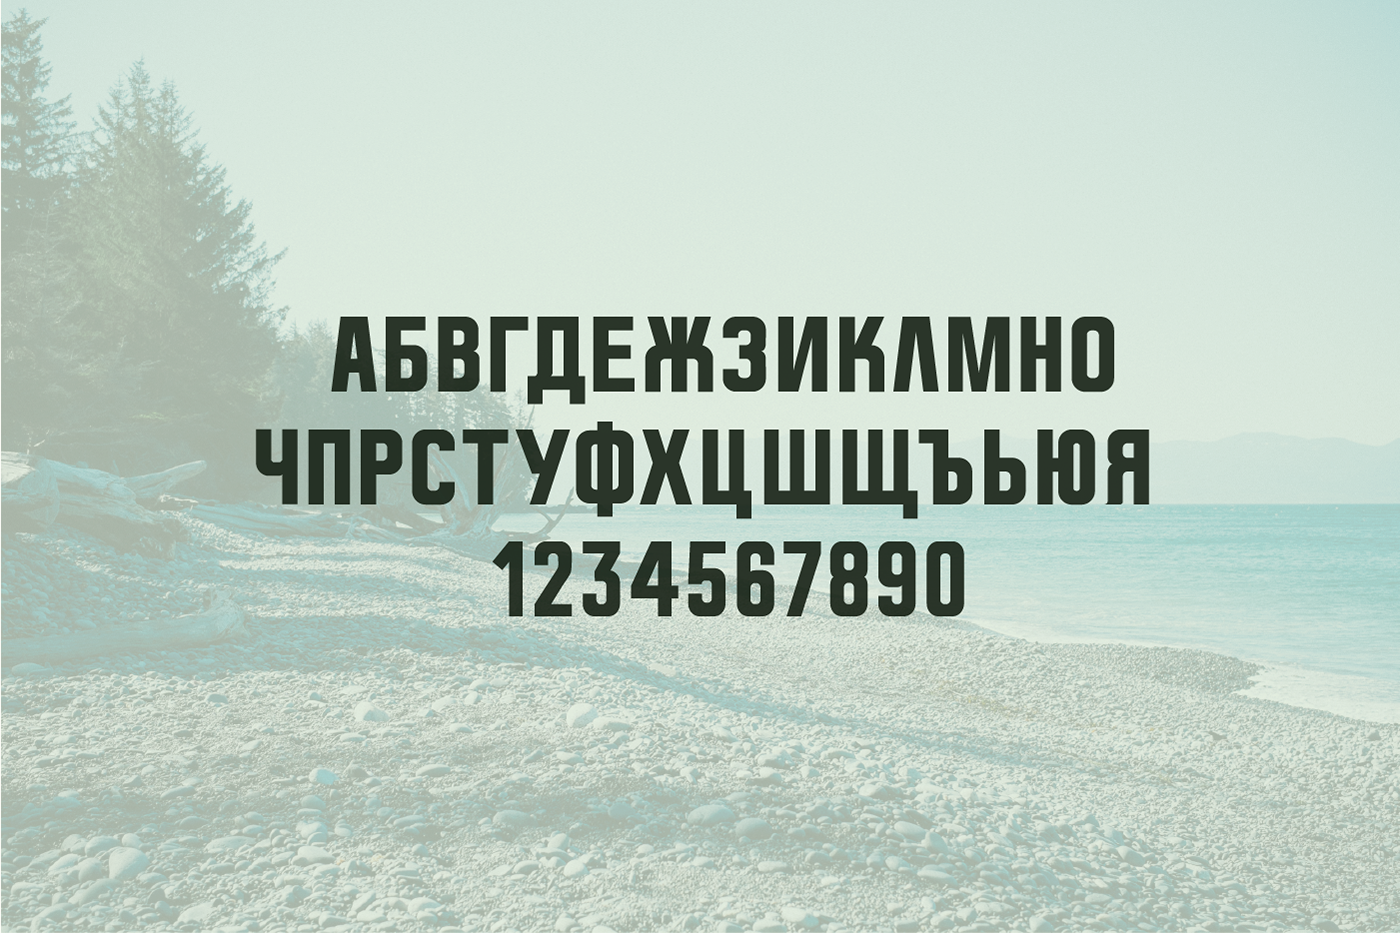 font Cyrillic letter